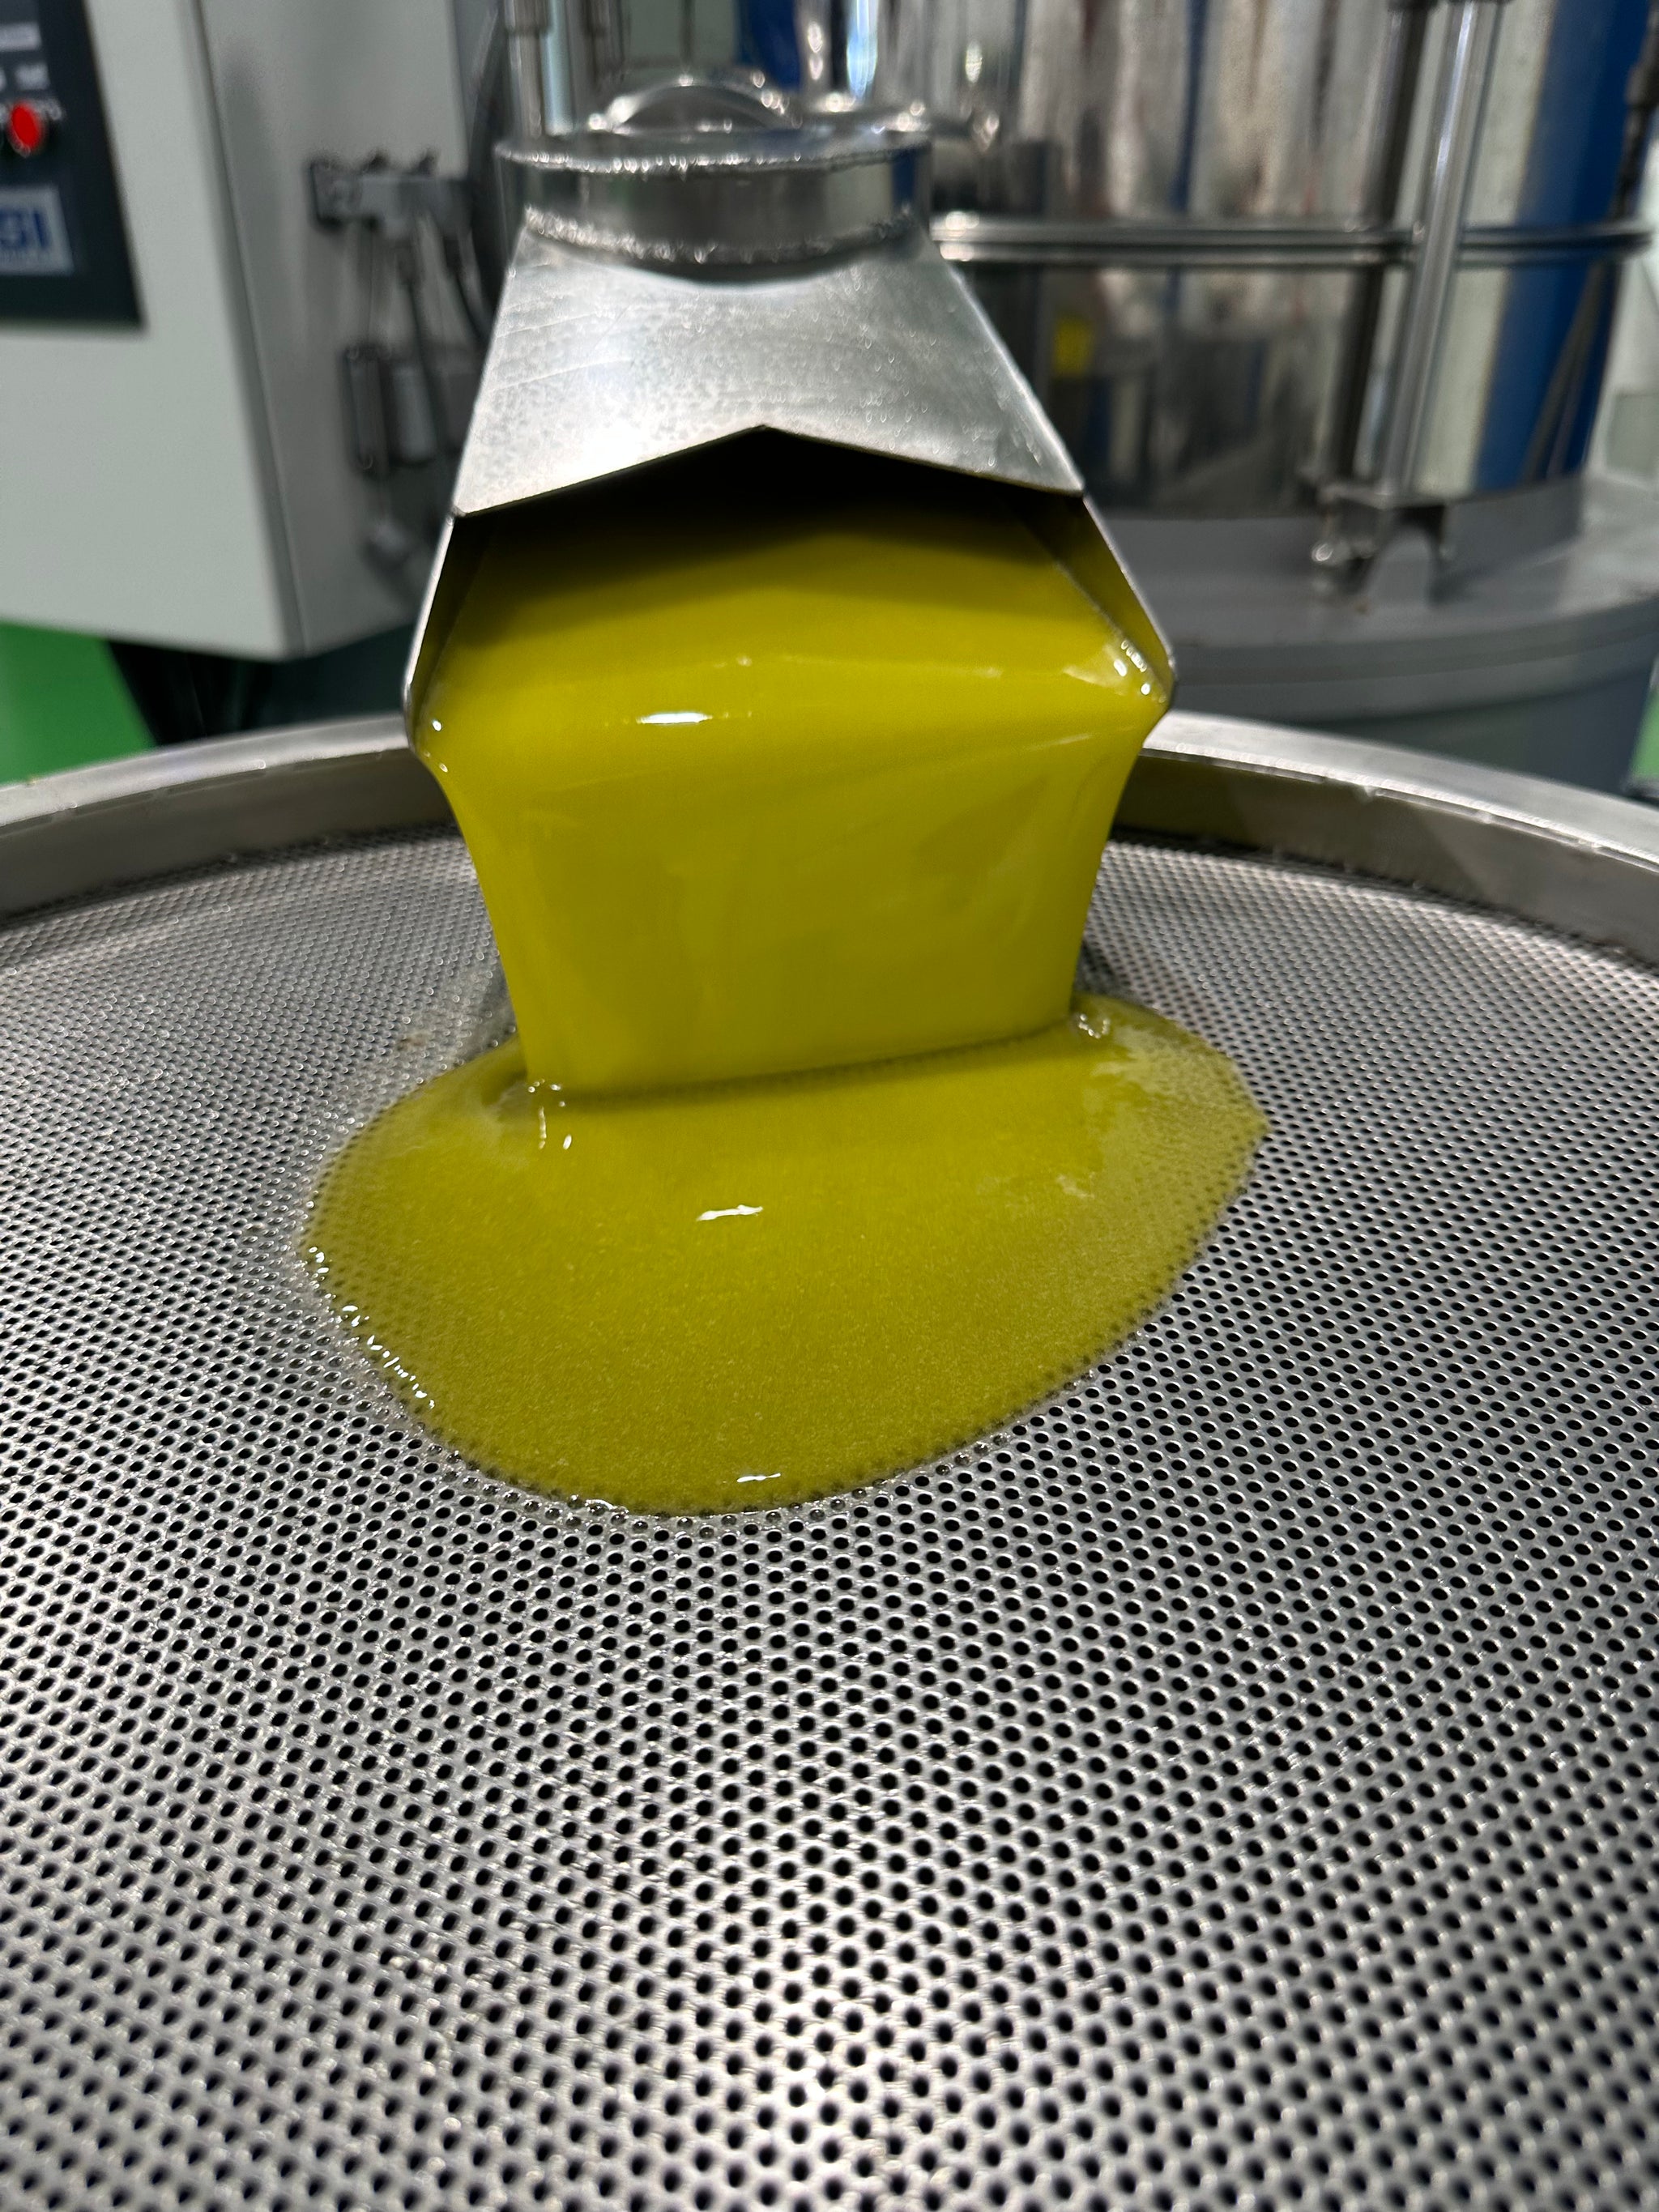 Sentio Extra Virgin Olive Oil 1 Gallon